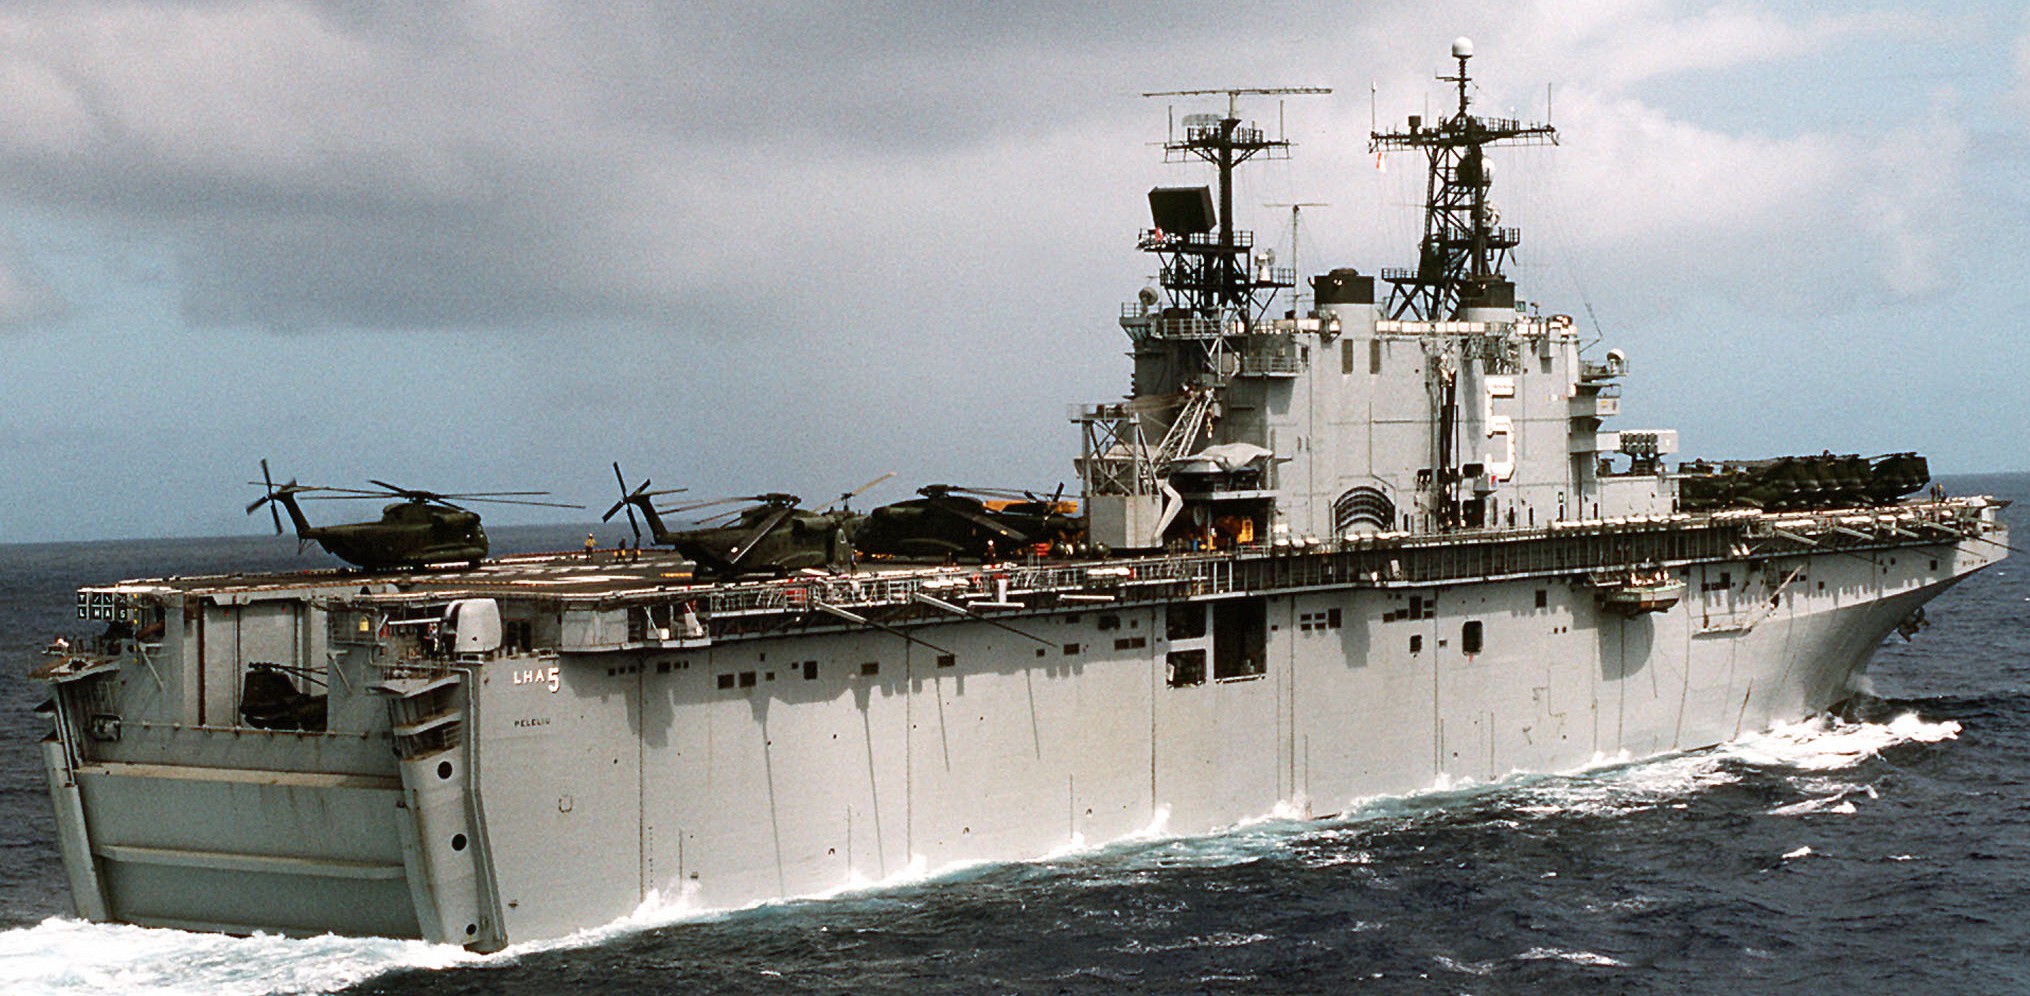 lha-5 uss peleliu tarawa class amphibious assault ship landing helicopter us navy hmm-262(c) marines 137